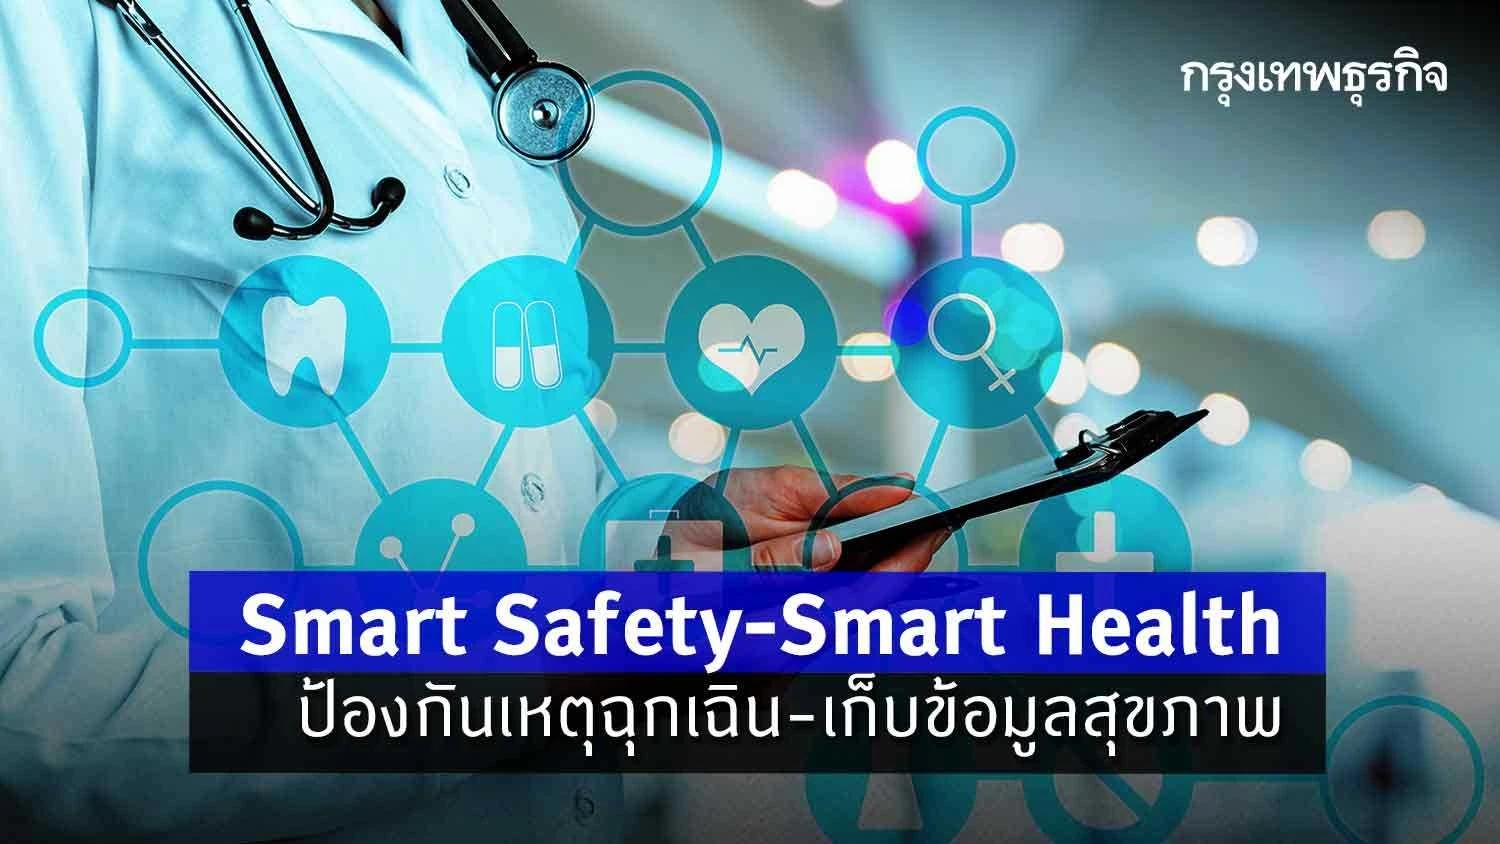 Smart Safety-Smart Health ป้องกันเหตุฉุกเฉิน-เก็บข้อมูลสุขภาพ